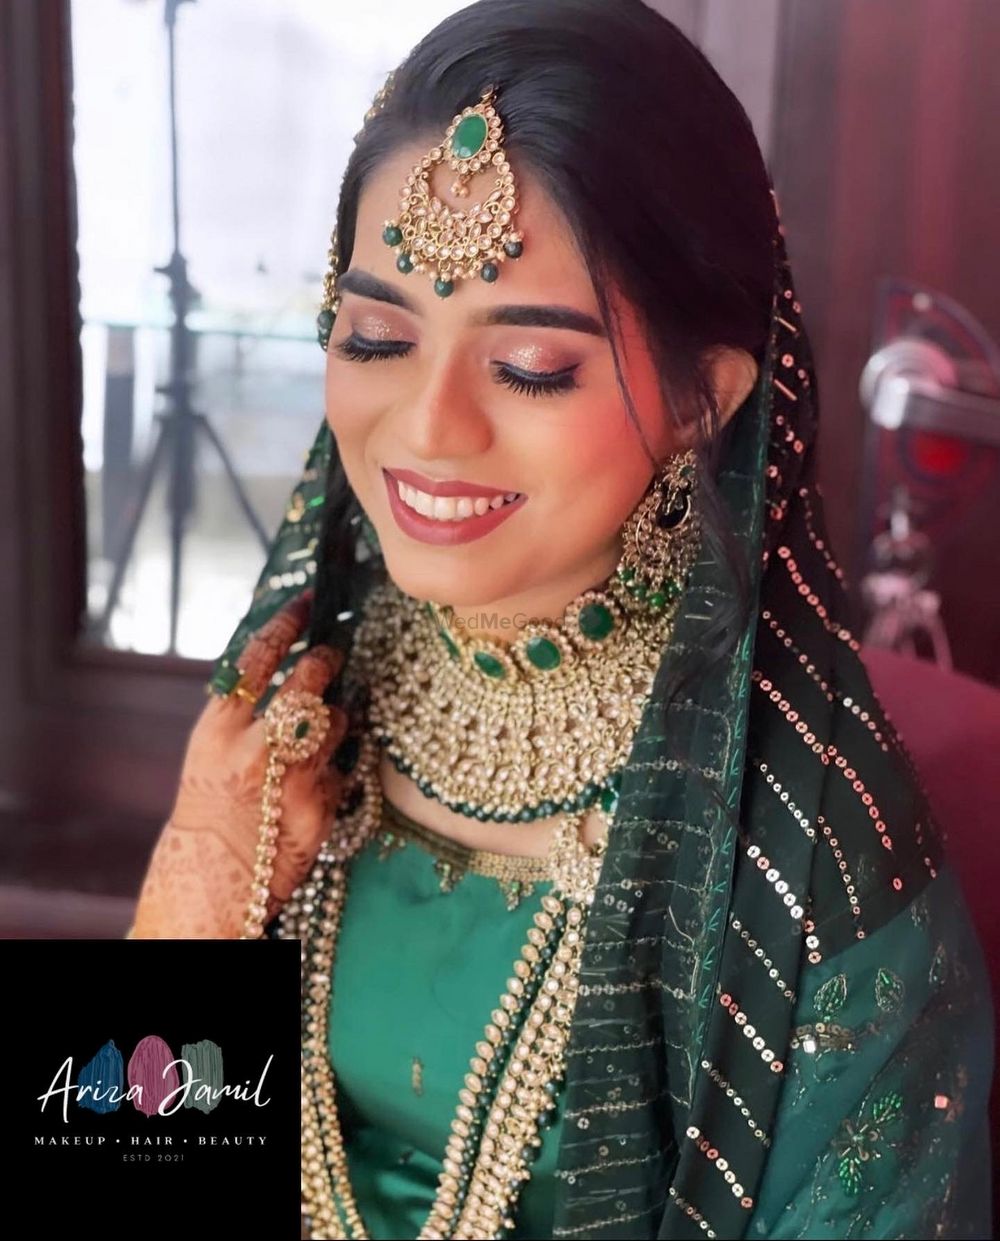 Photo By Ariza Jamil Makeover - Bridal Makeup